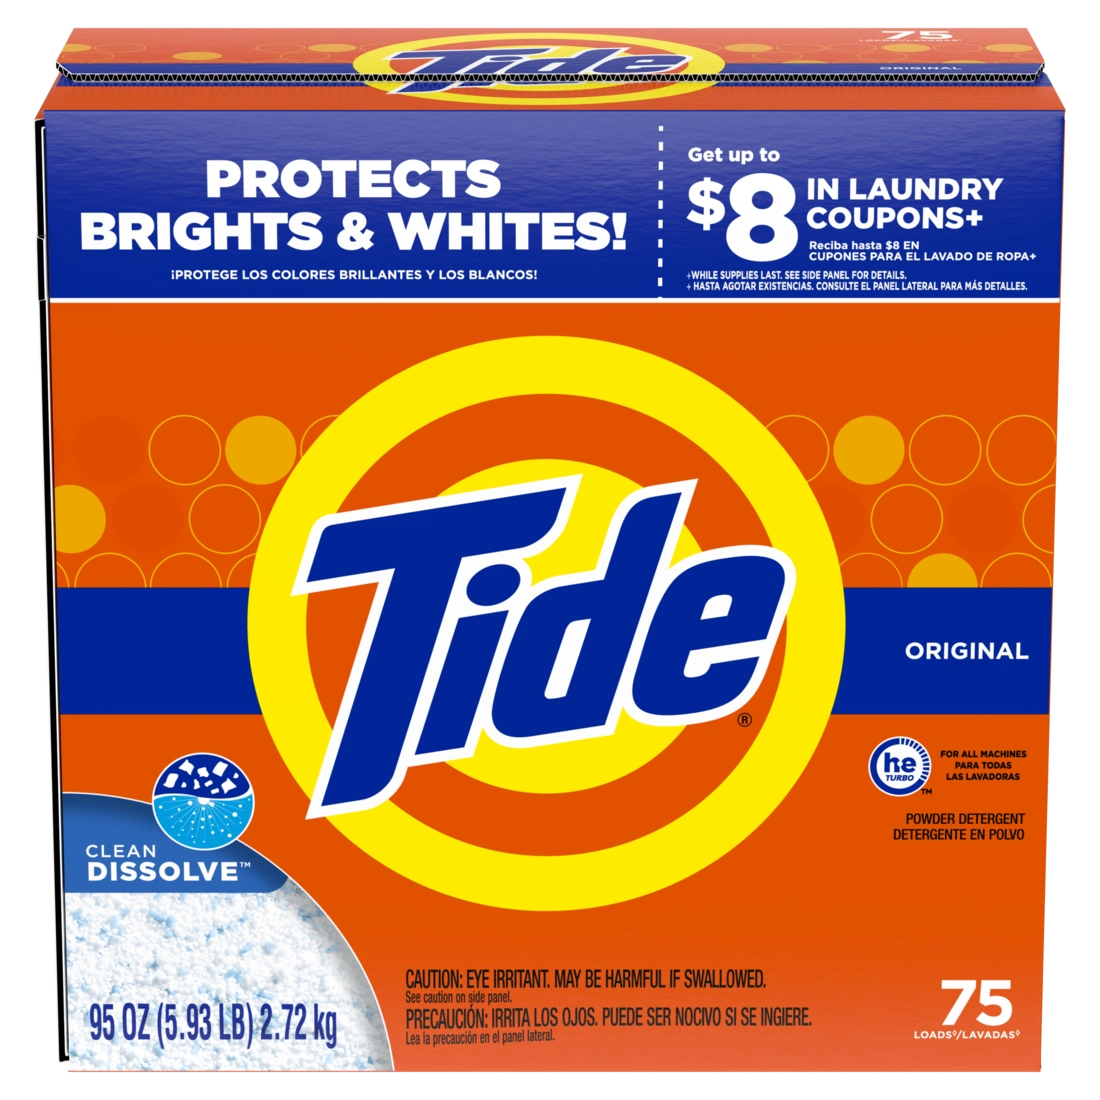 Powder Laundry Detergent product image